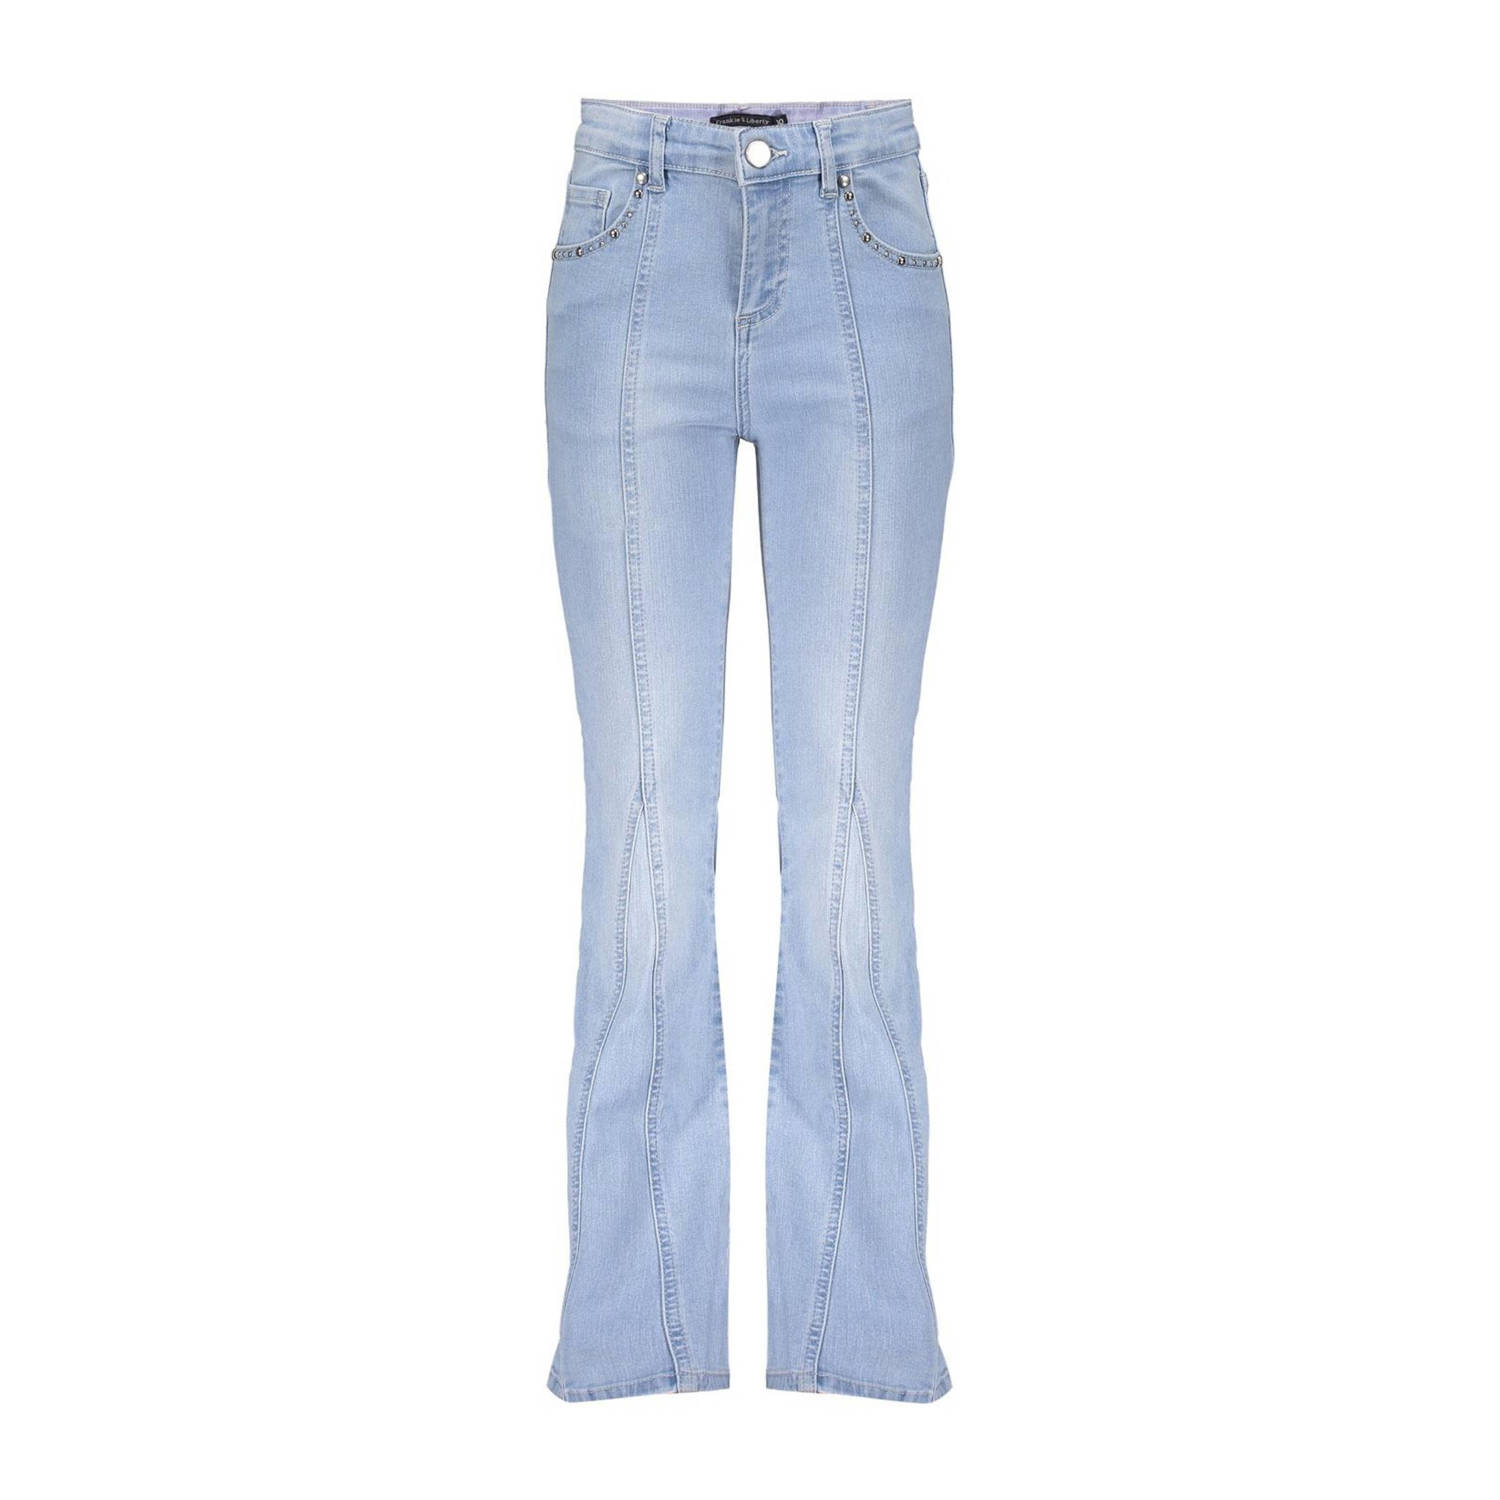 Frankie&Liberty flared jeans light blue denim Blauw 152